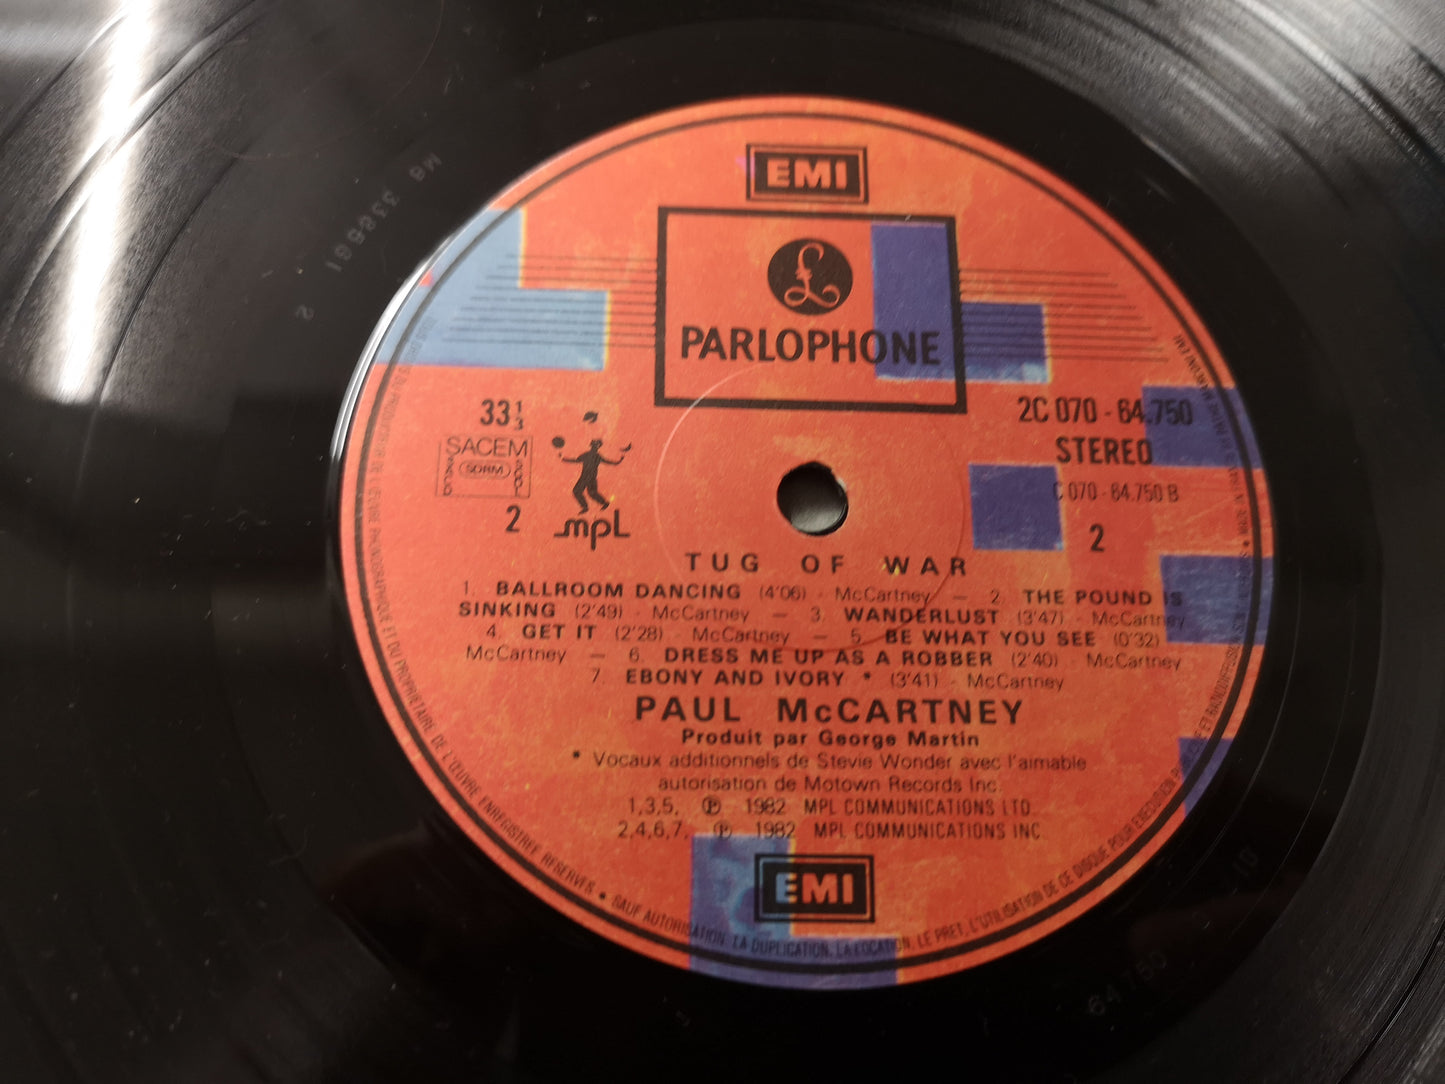 Paul McCartney "Tug of War" Orig France 1982 M-/M-